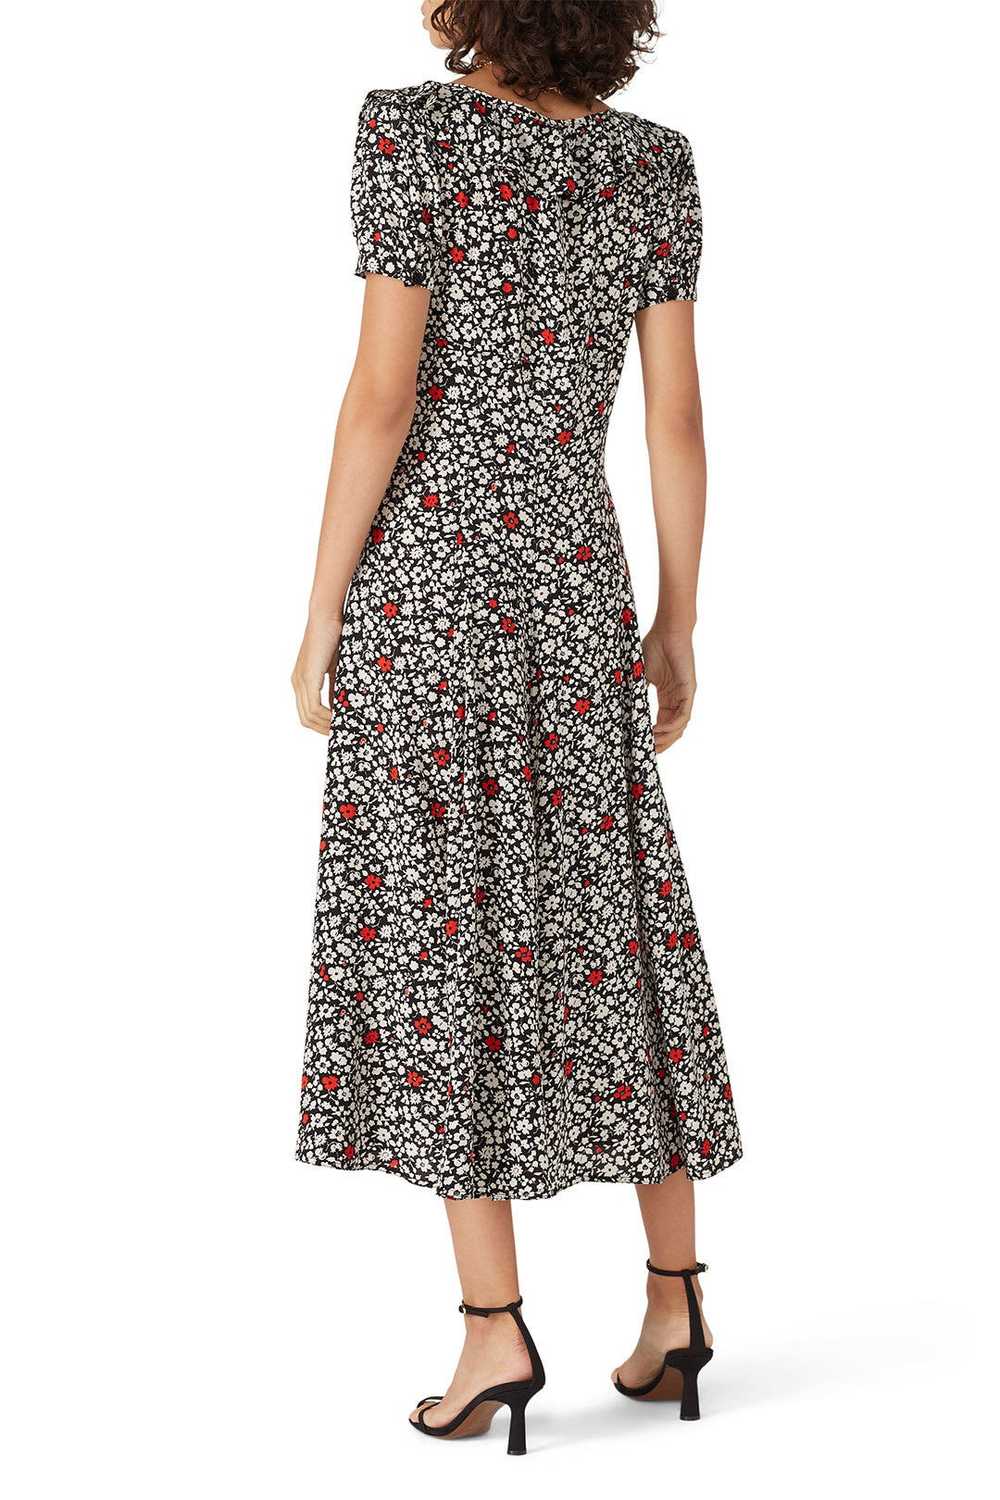 Polo Ralph Lauren Black Floral Short Sleeves Dress - image 3